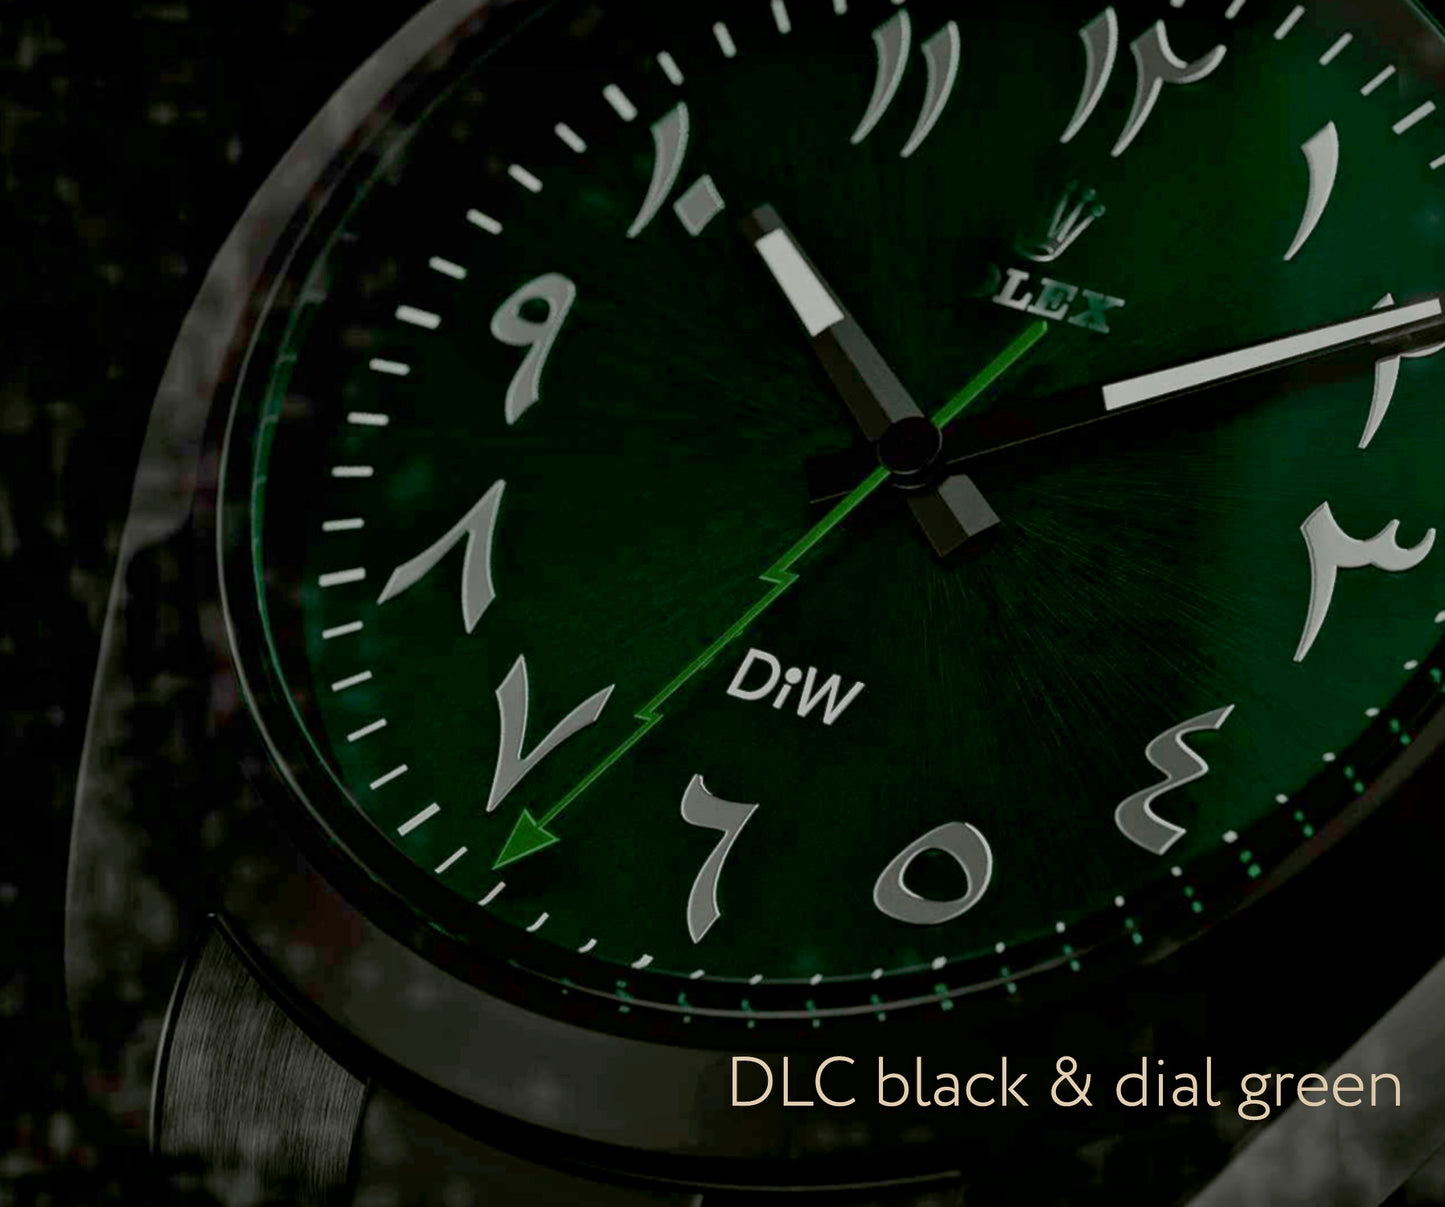 DiW Rolex Milgauss DLC BLACK & DIAL GREEN 116400GV | WORLDTIMER